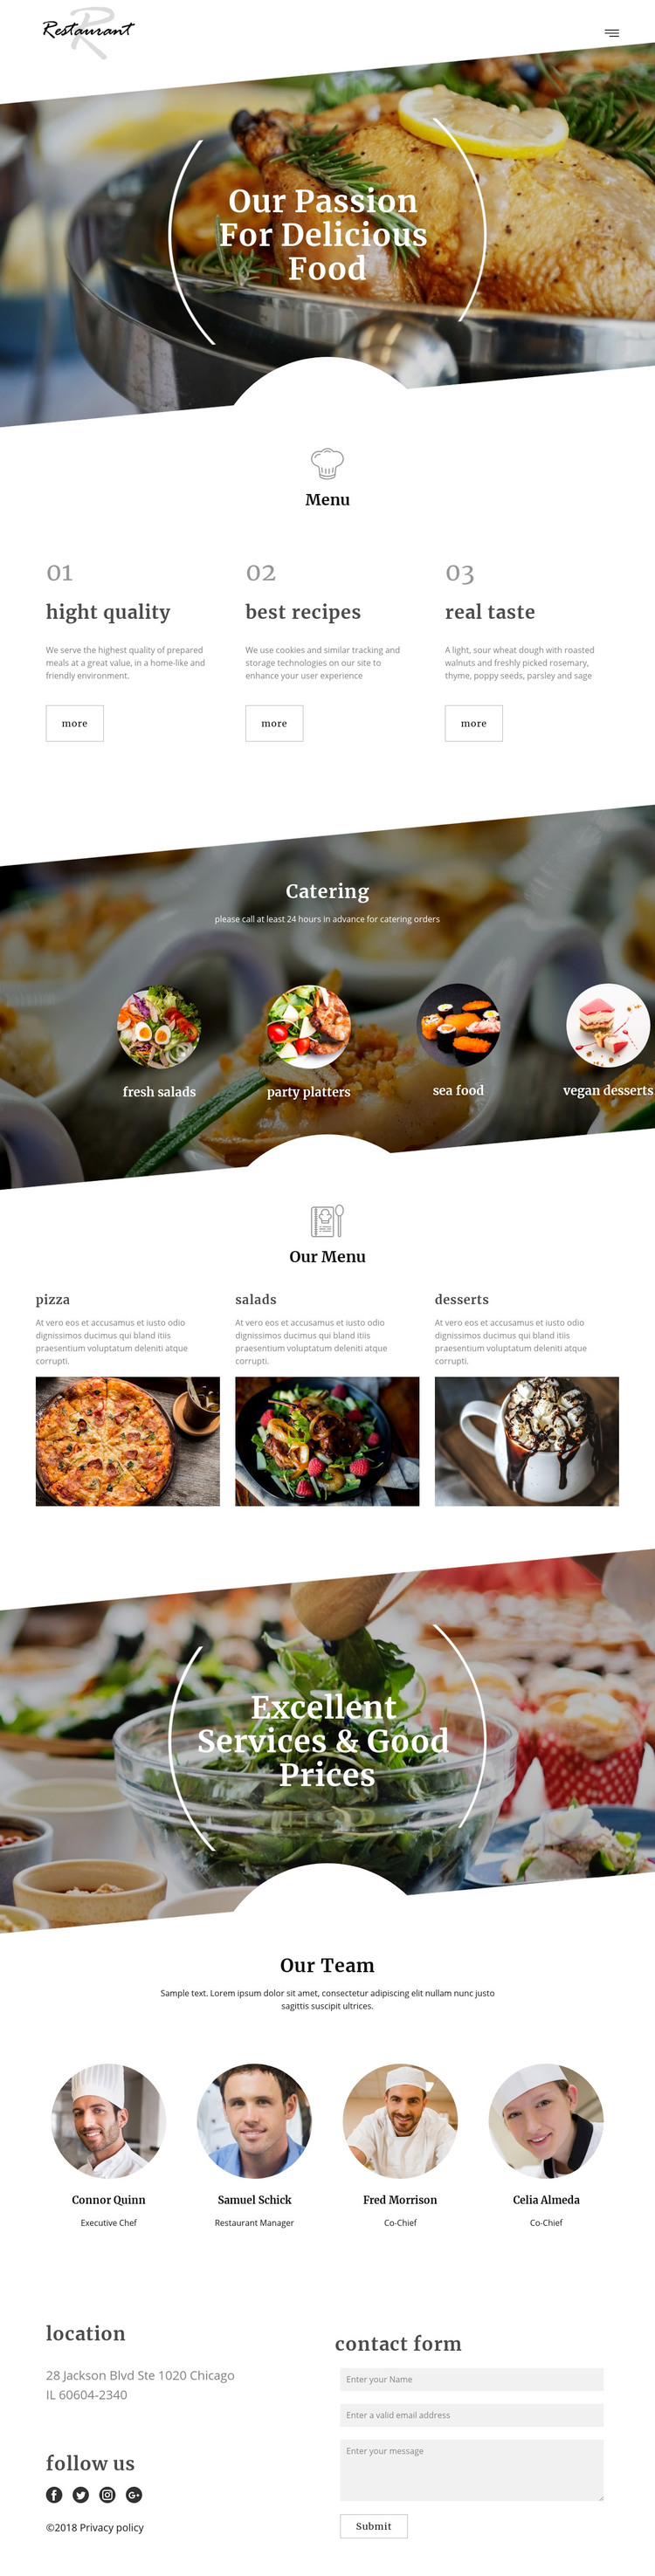 Executive chef recipes WordPress Website